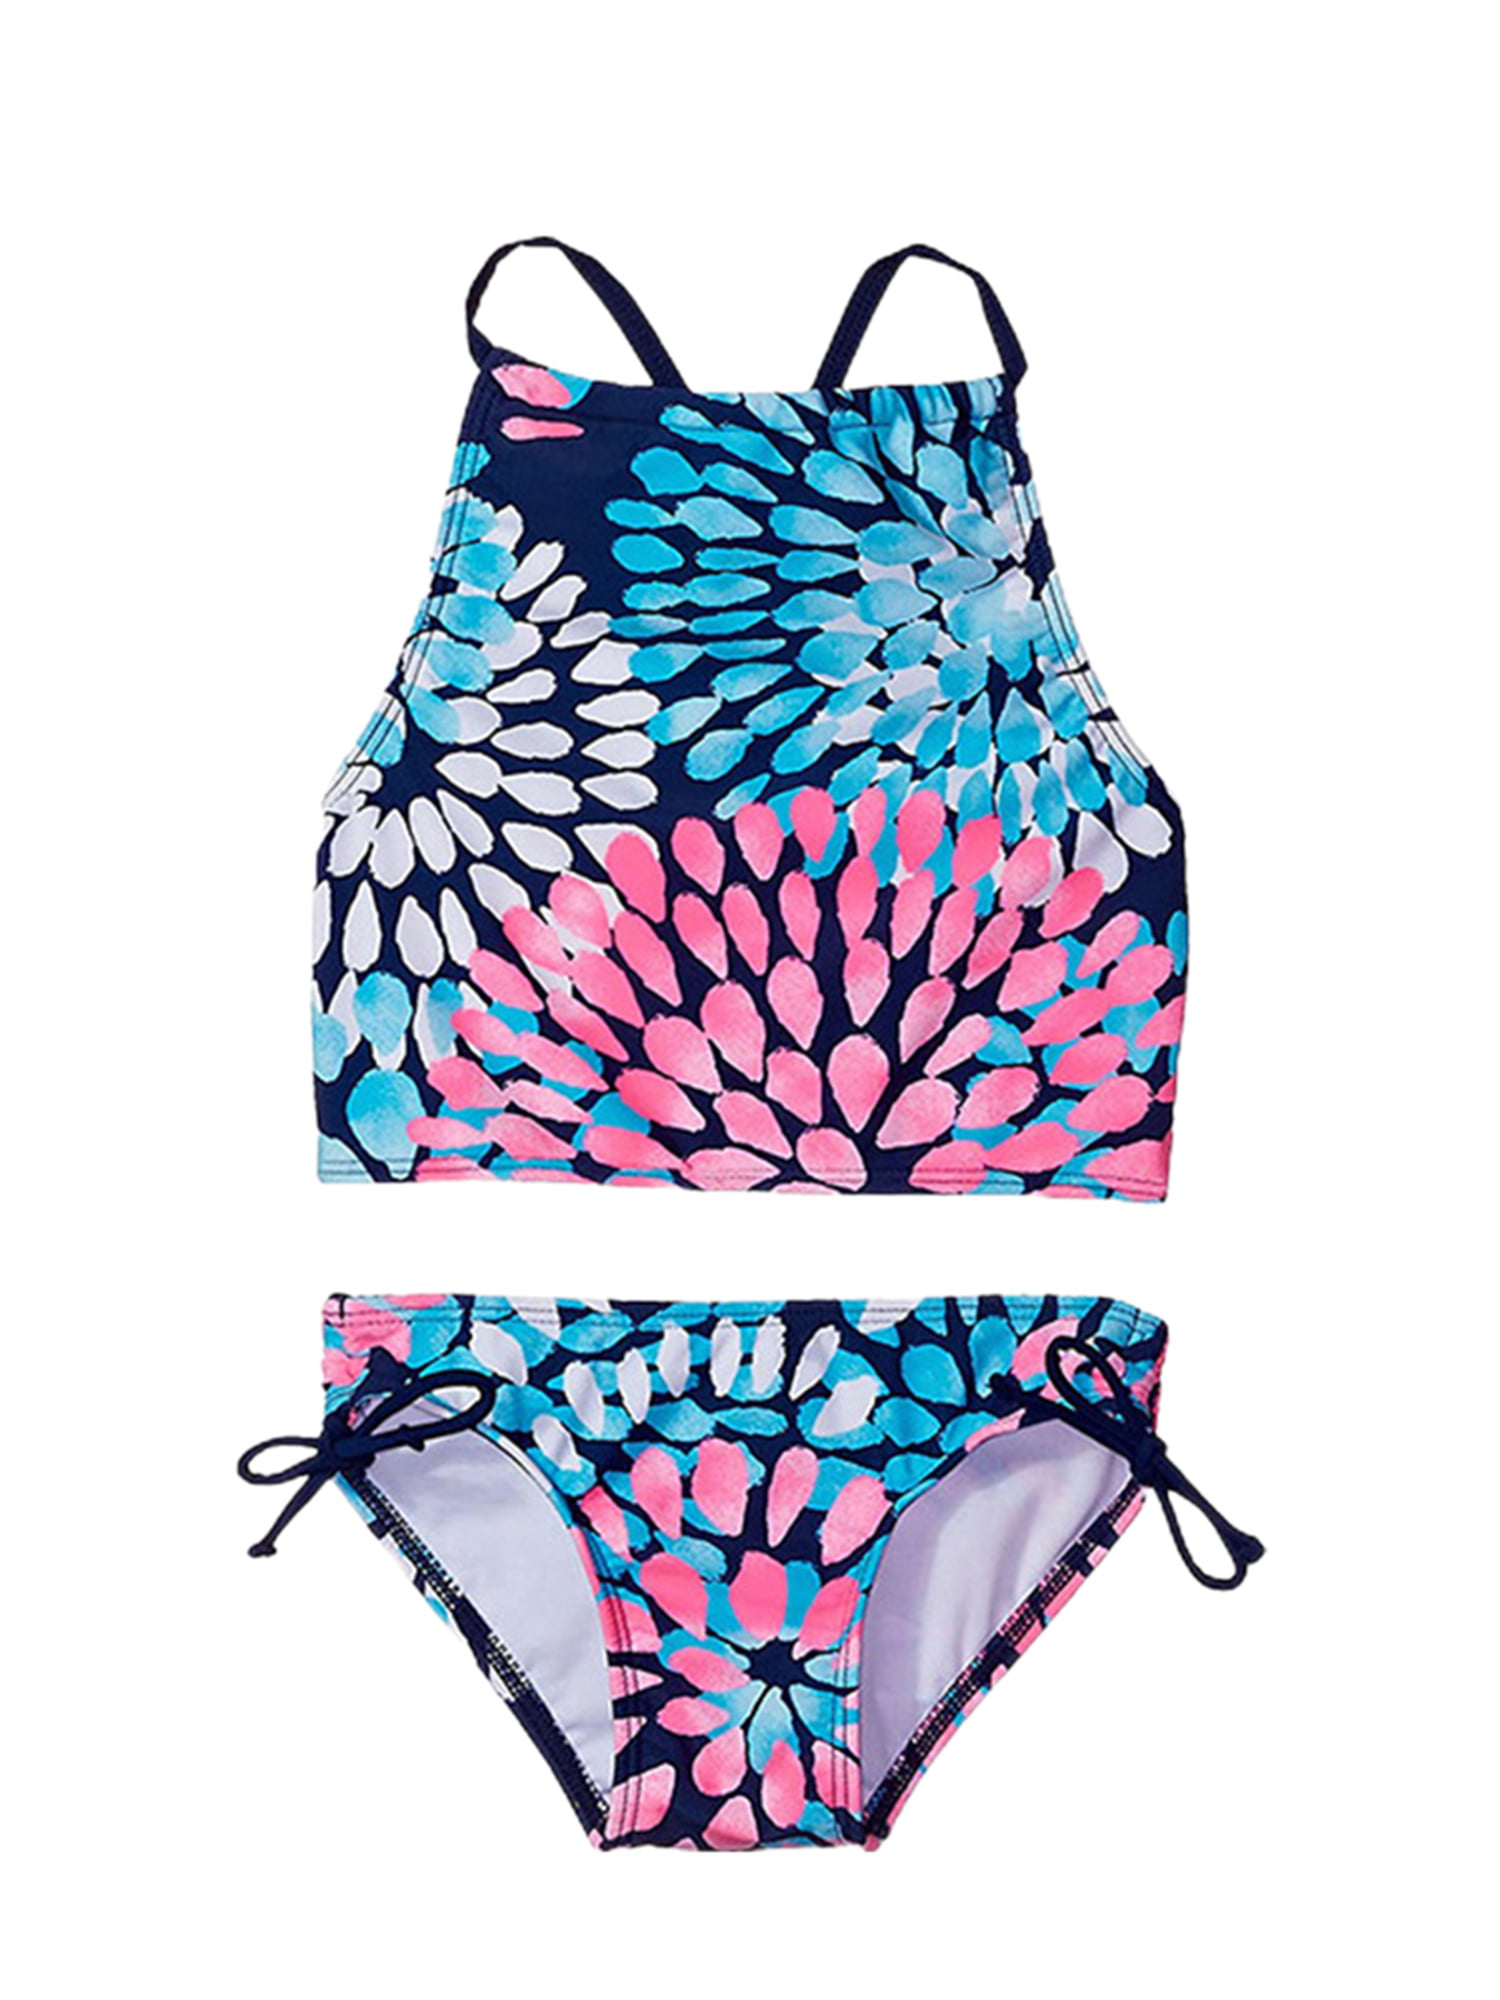 UPAIRKIDS Girls Kids Child Swimwear Floral Bikini Set Lace Up Beachwear ...